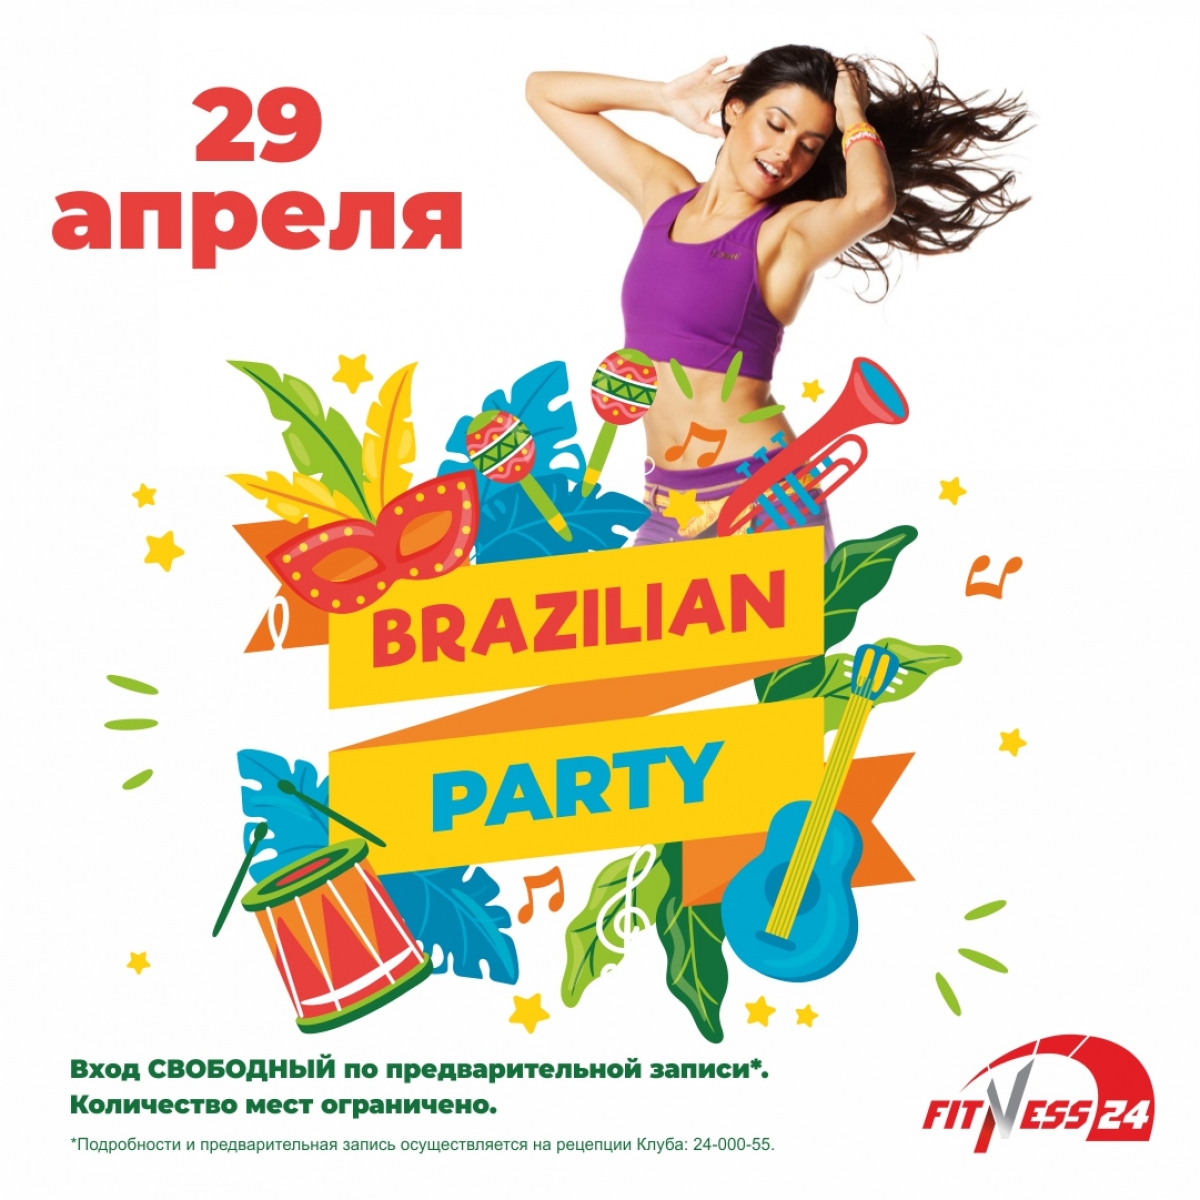 BRAZILIAN PARTY в Fitness24 Лиговский!